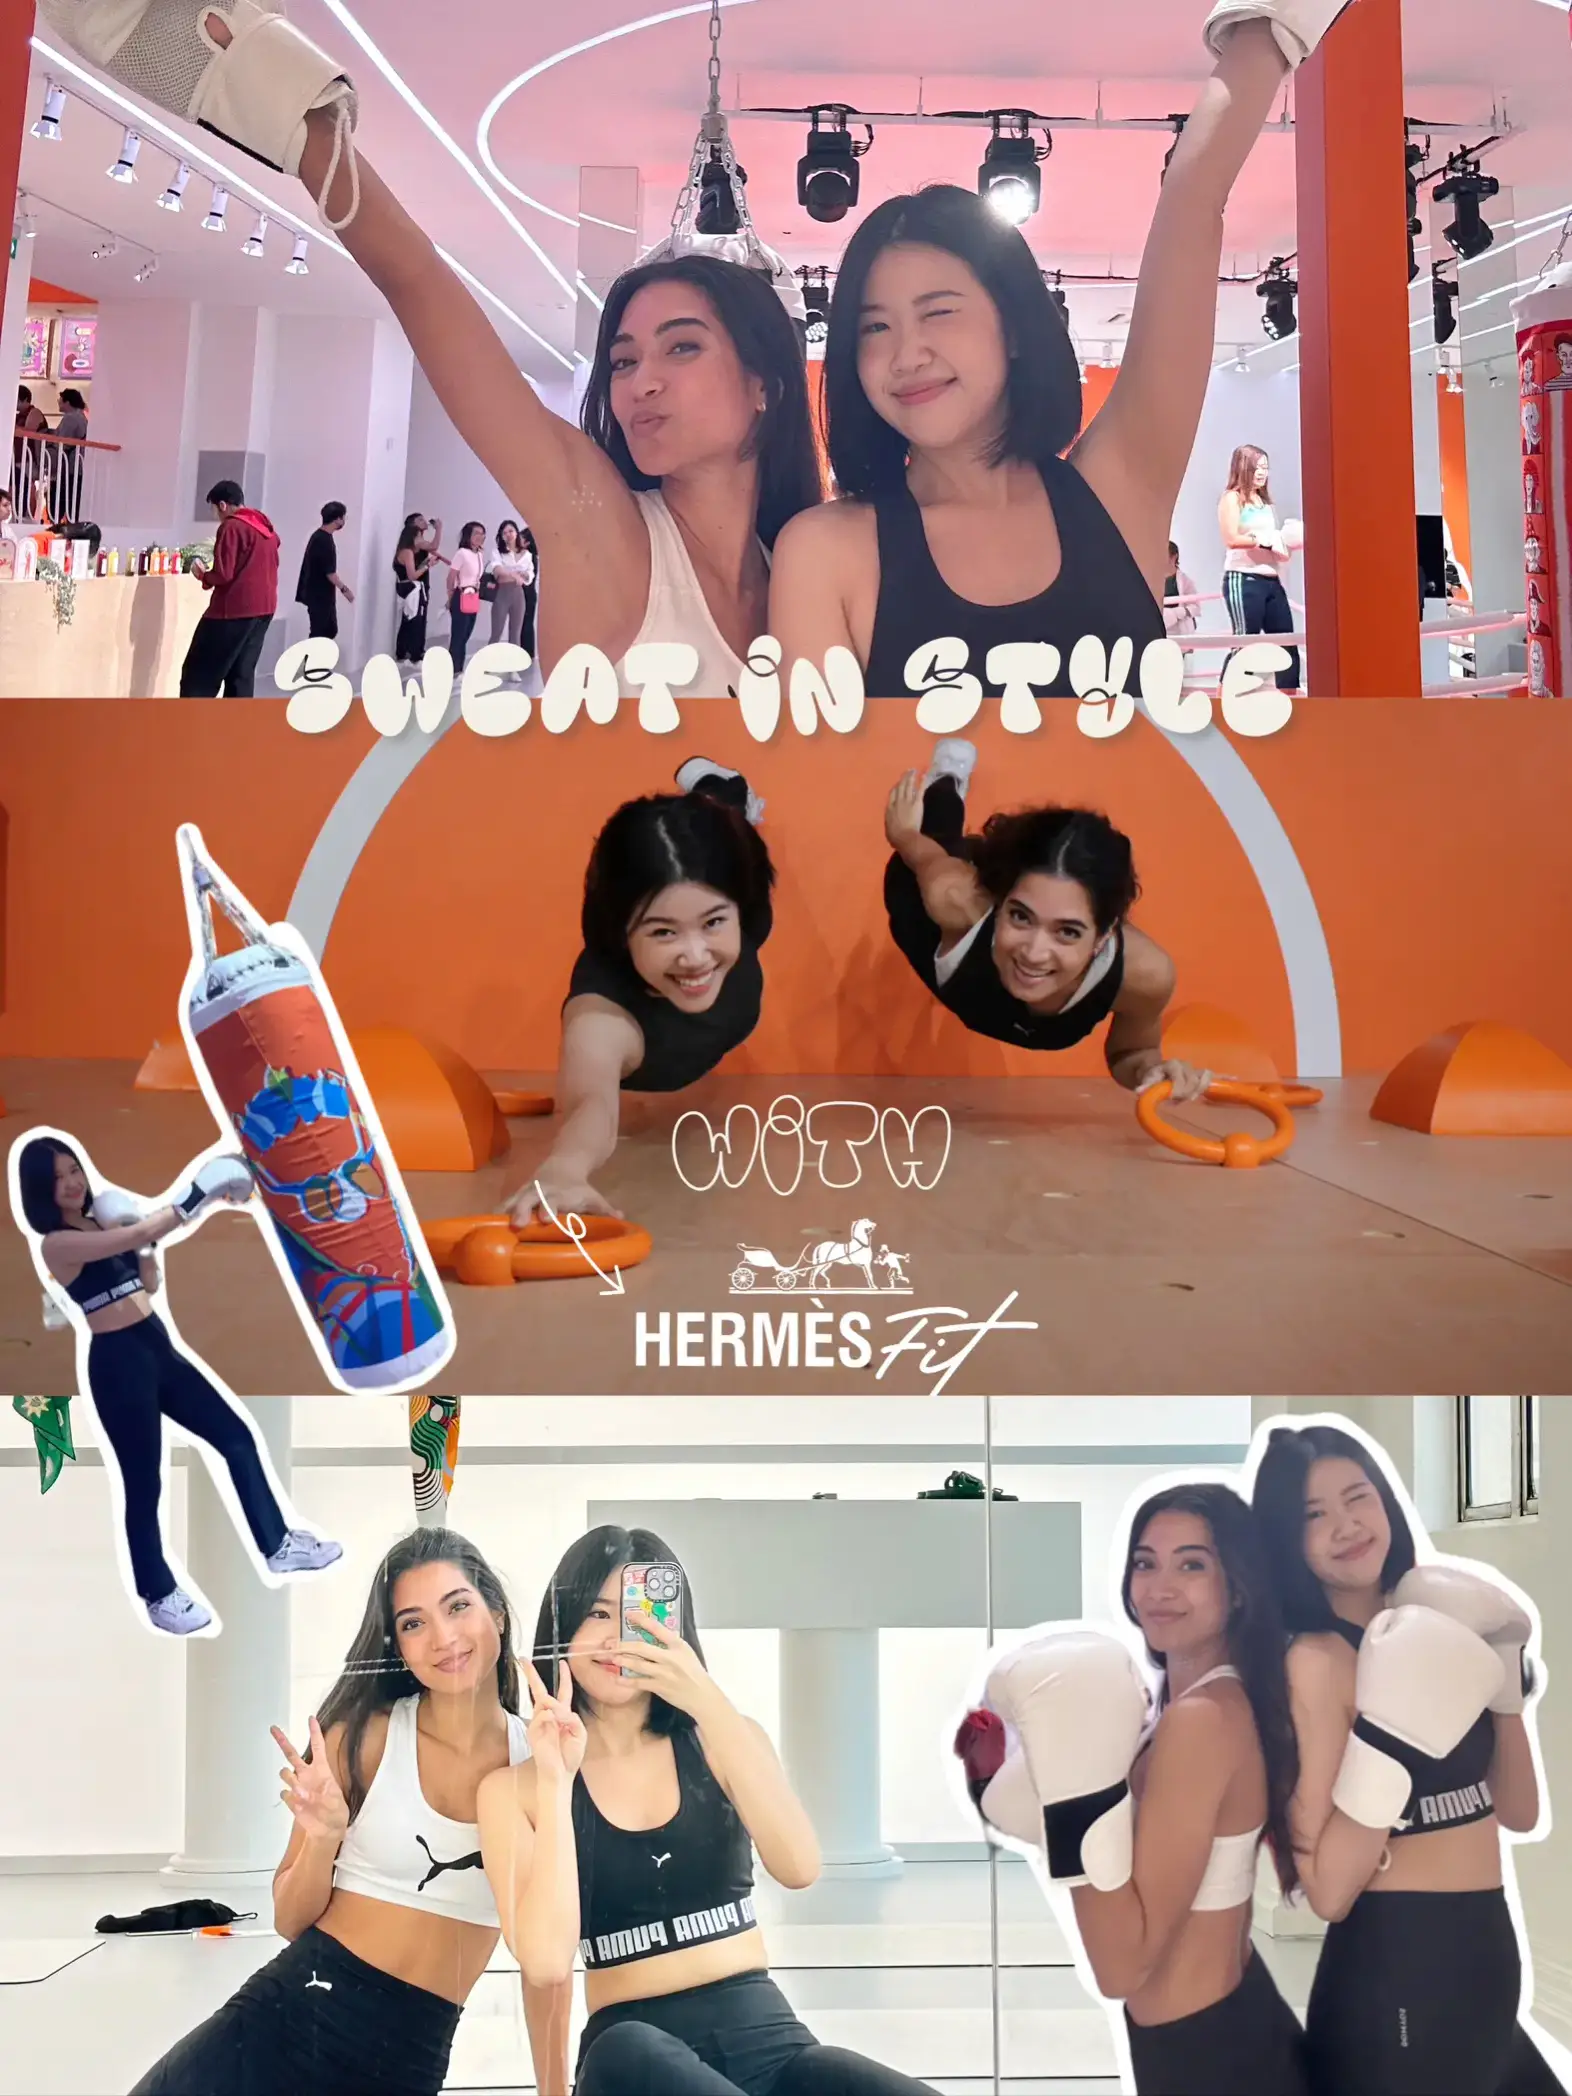 Bespoke Hermes pop-up gym HermesFit to open in Singapore on Apr 14